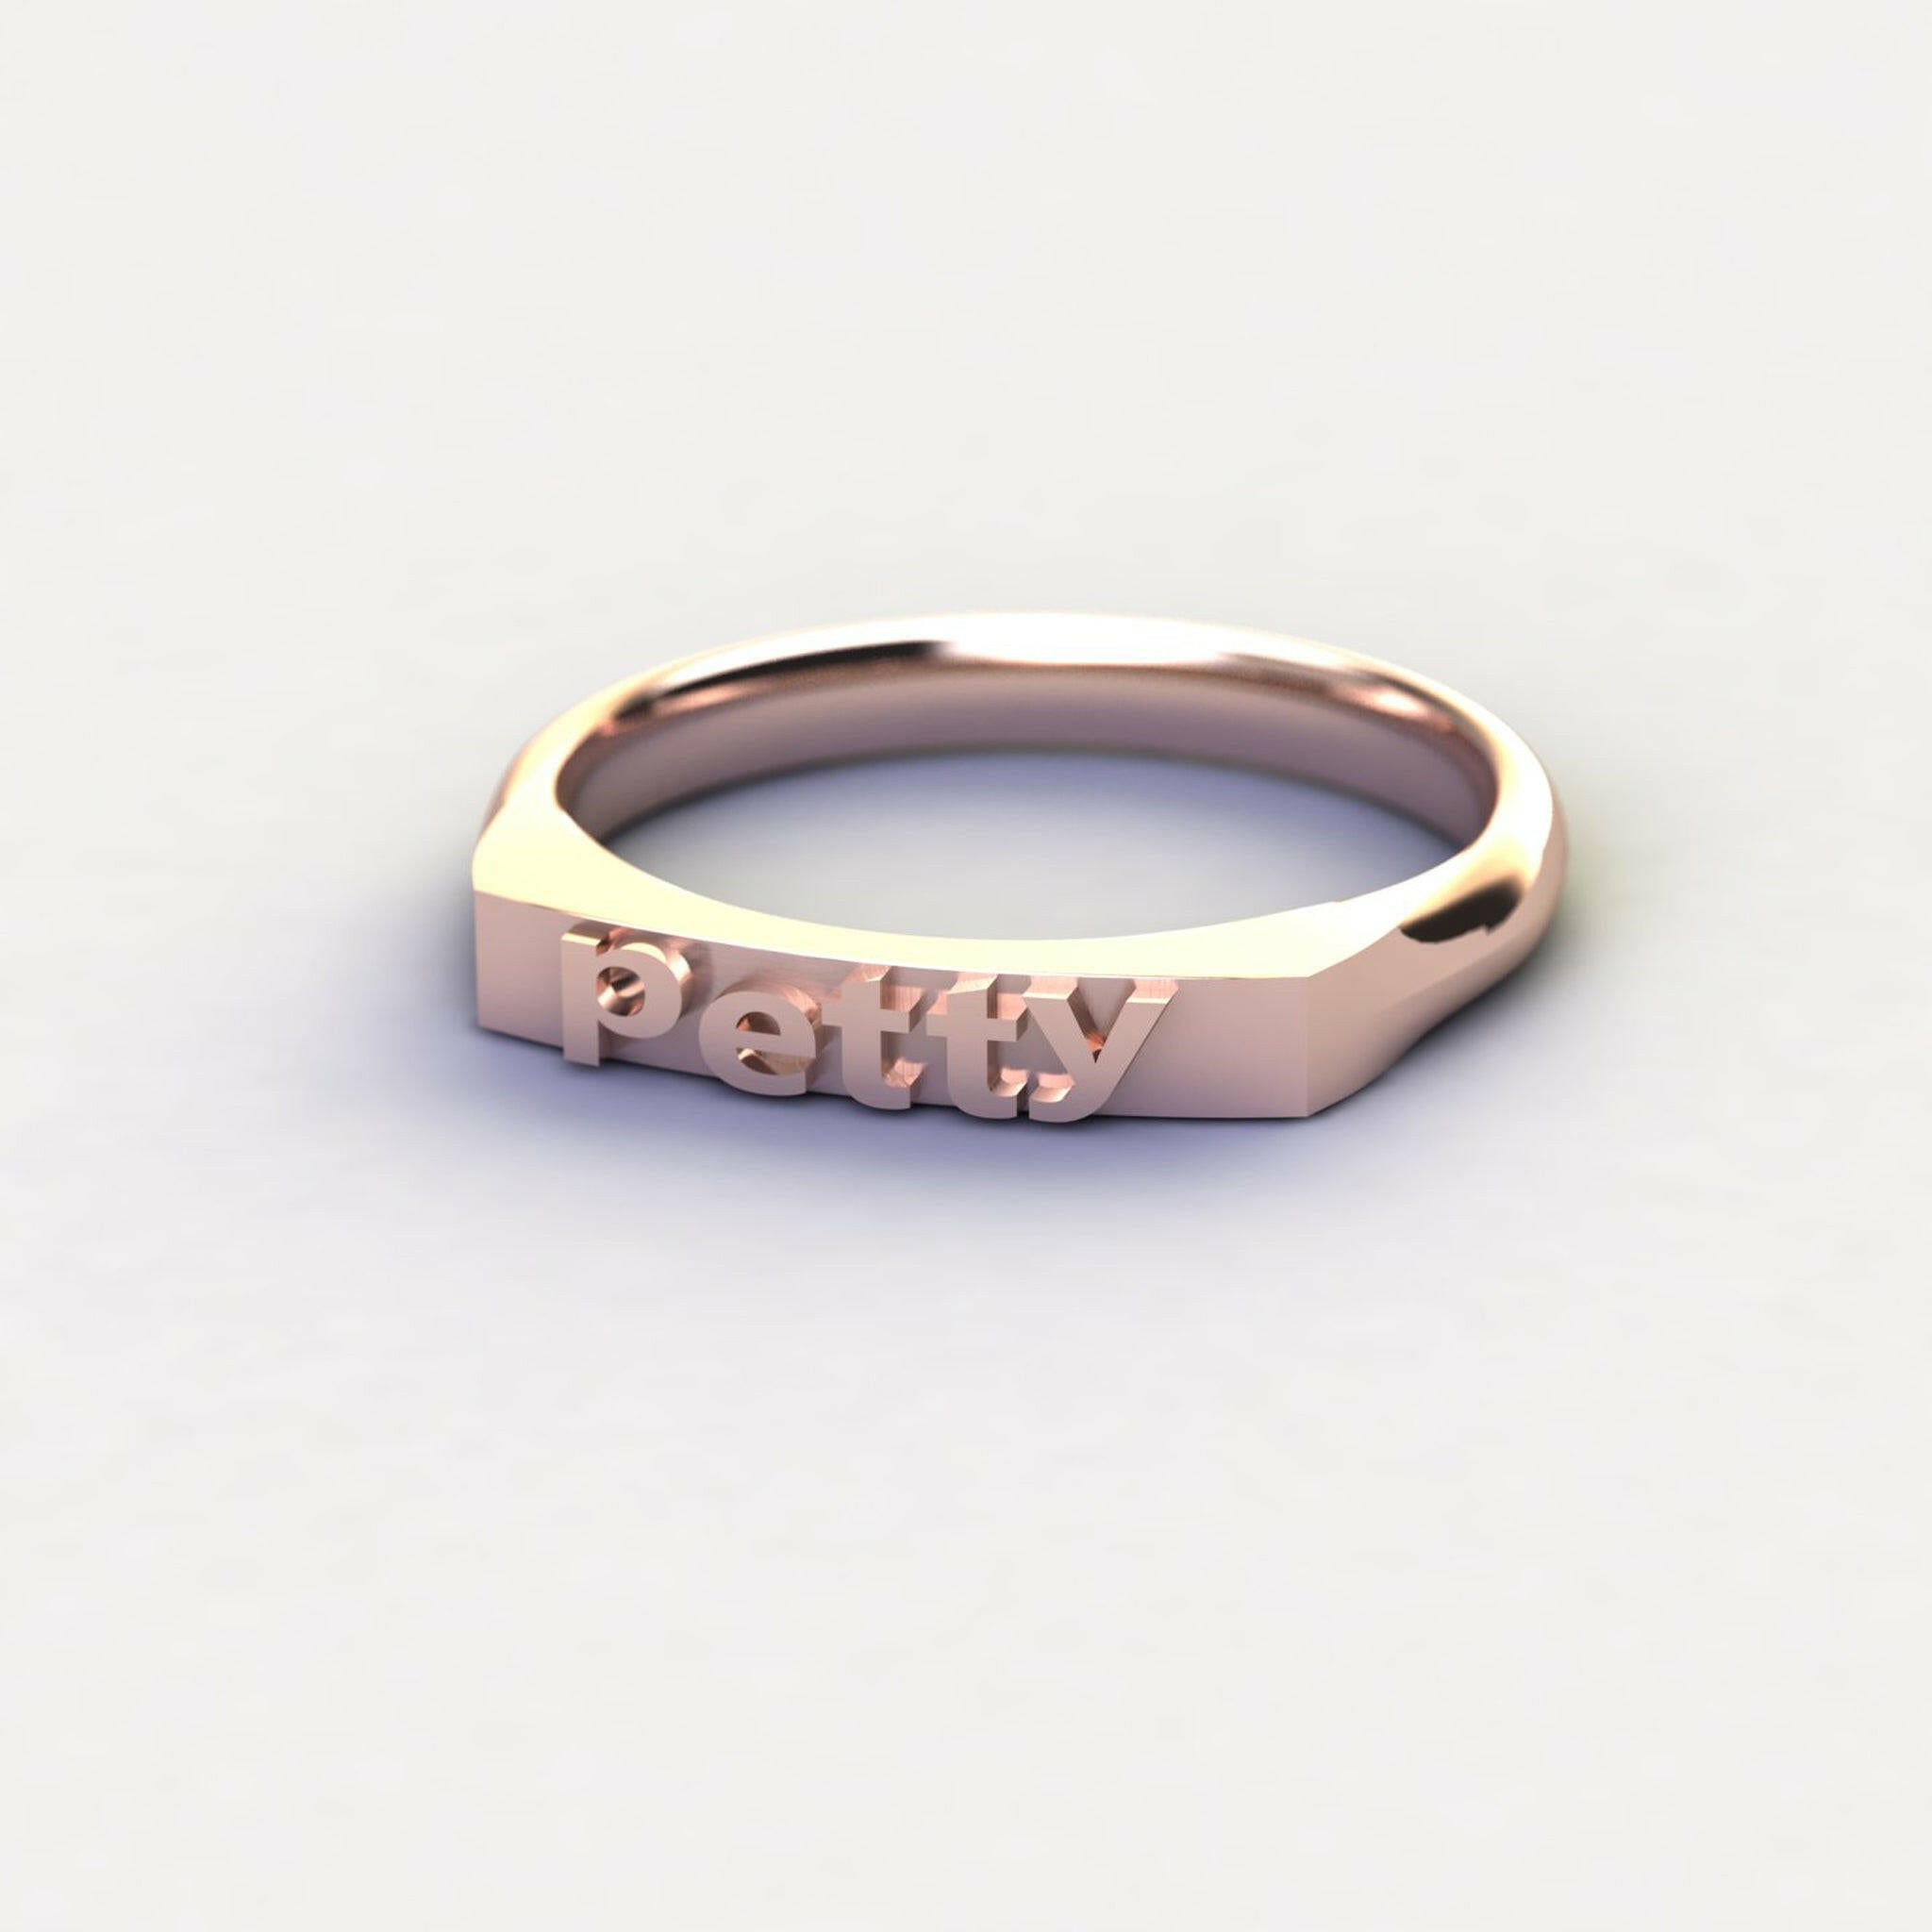 petty - Ilah Cibis Jewelry-Rings